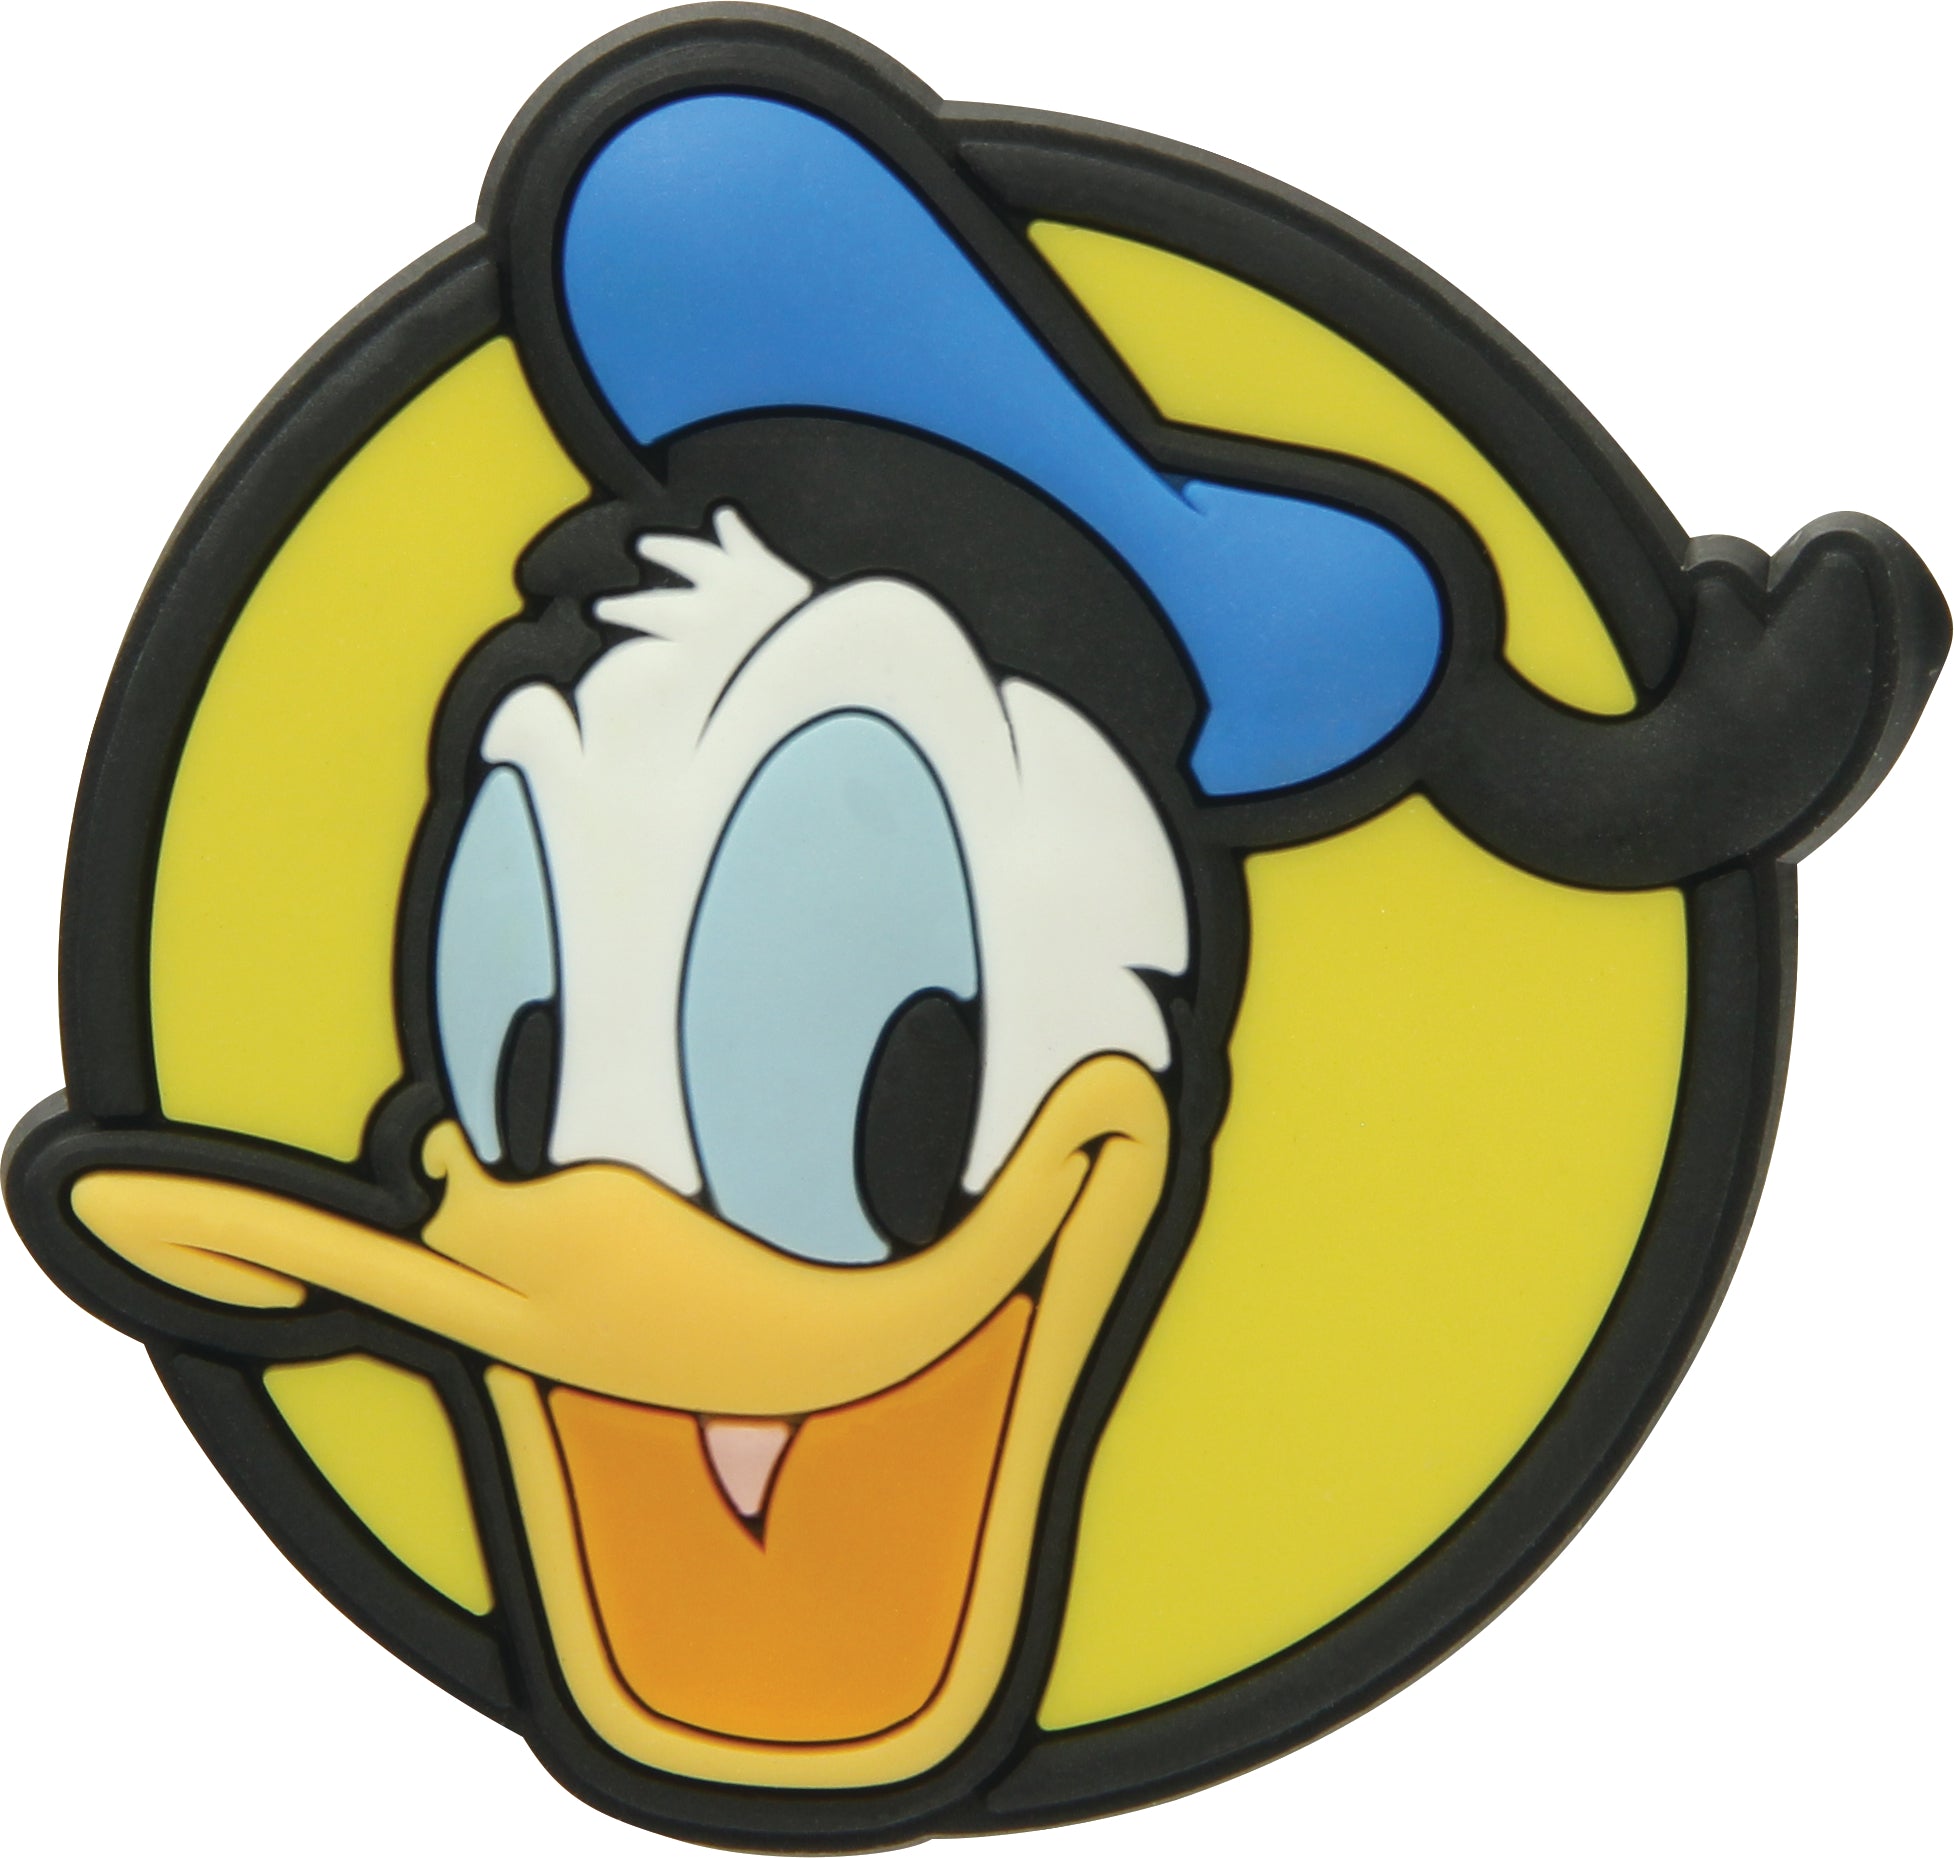 Donald Duck Charm SS17